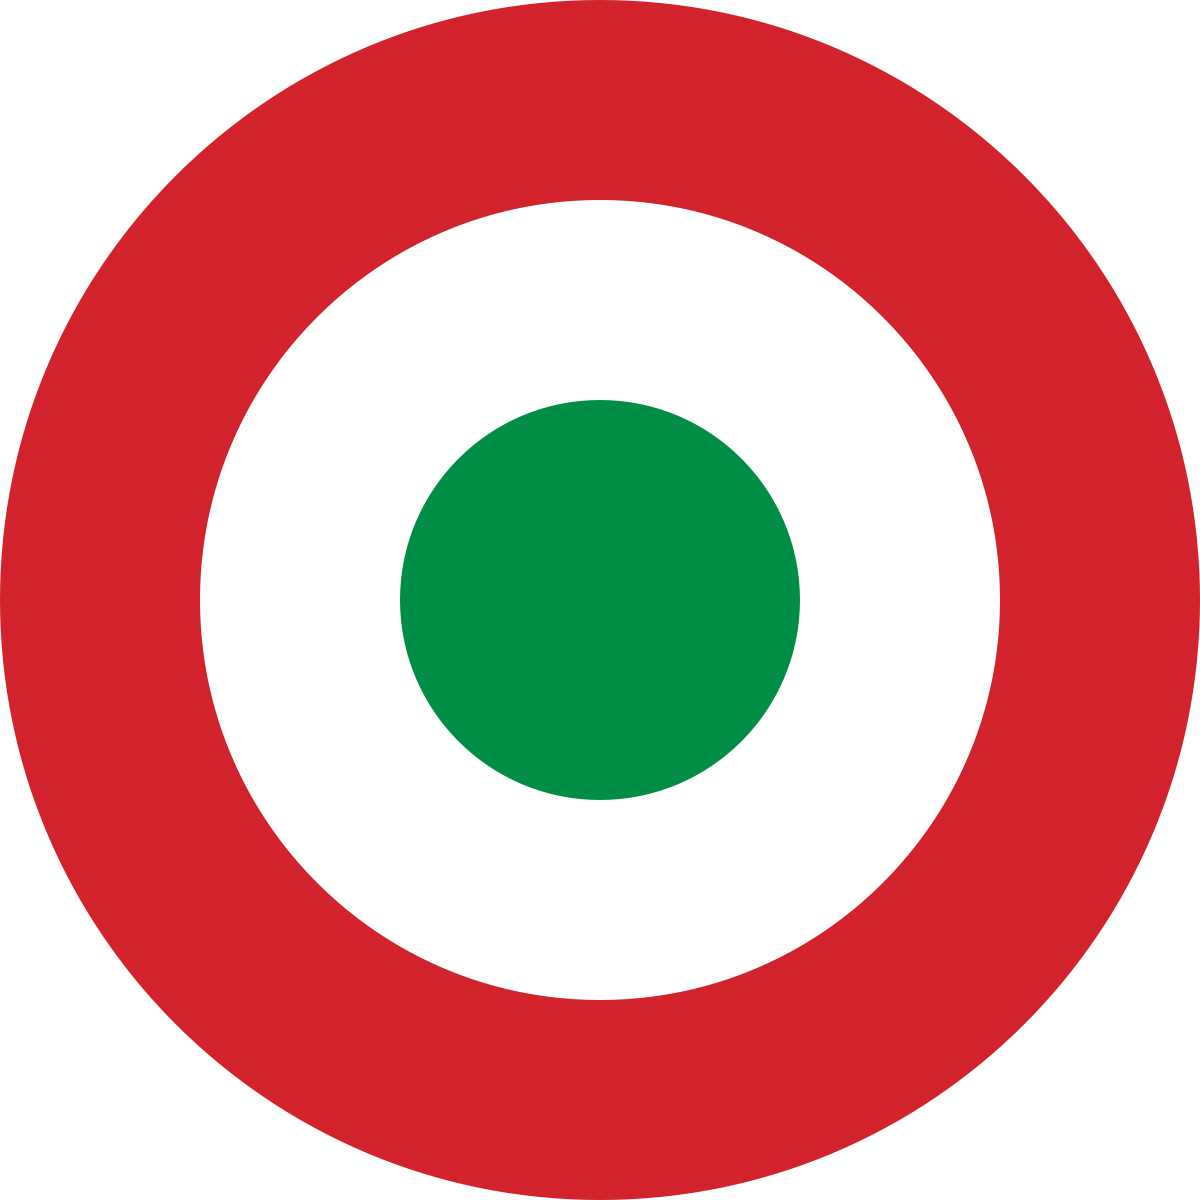 Italian Air Force Roundel (1200x1200)